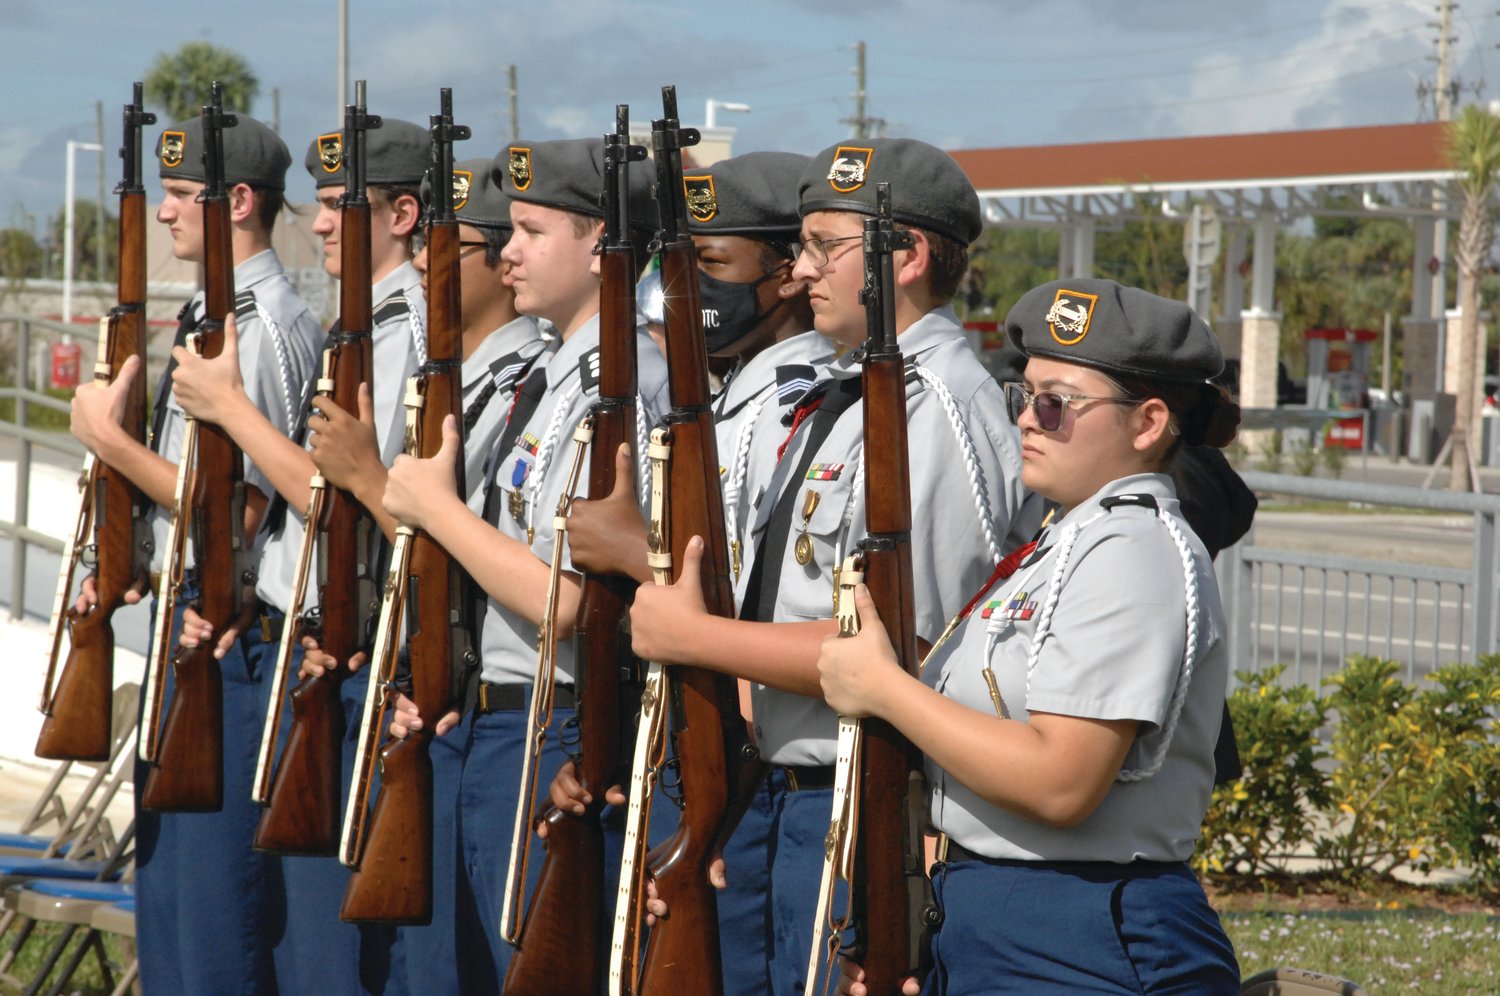 Okeechobee High School JROTC Honor Guard presented the 21-gun salute to the veterans.